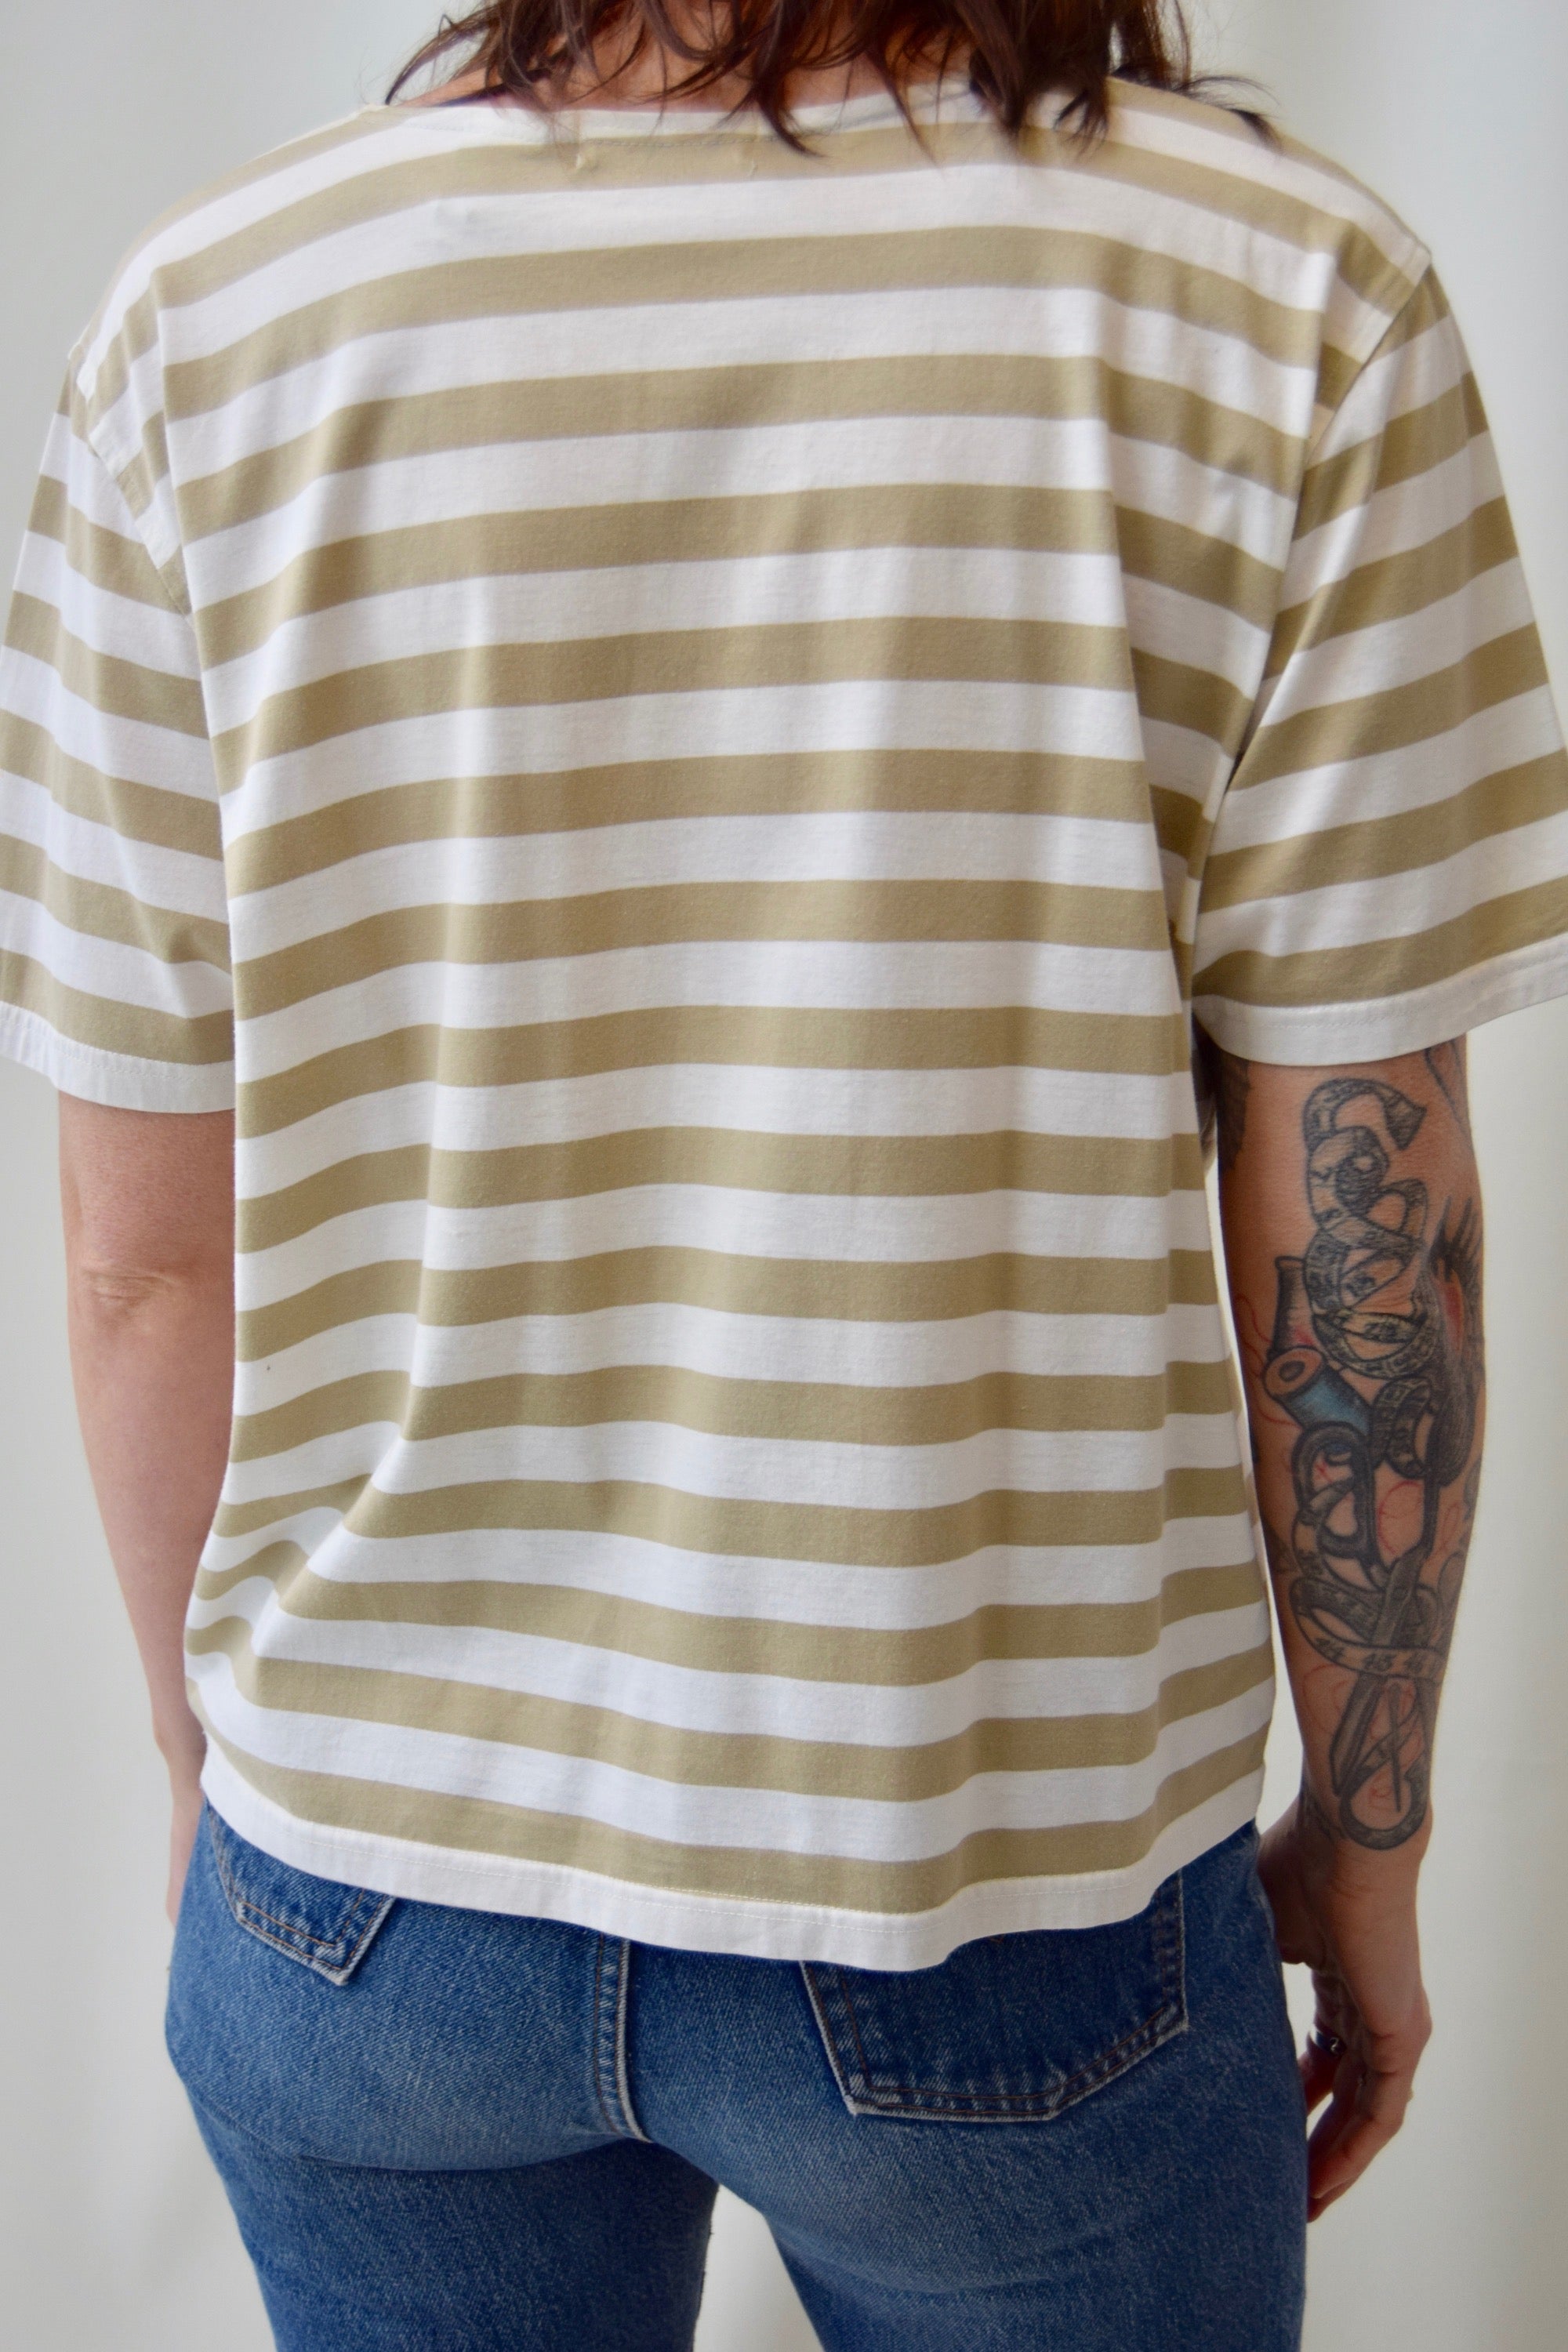 Tan And Cream Striped T-Shirt